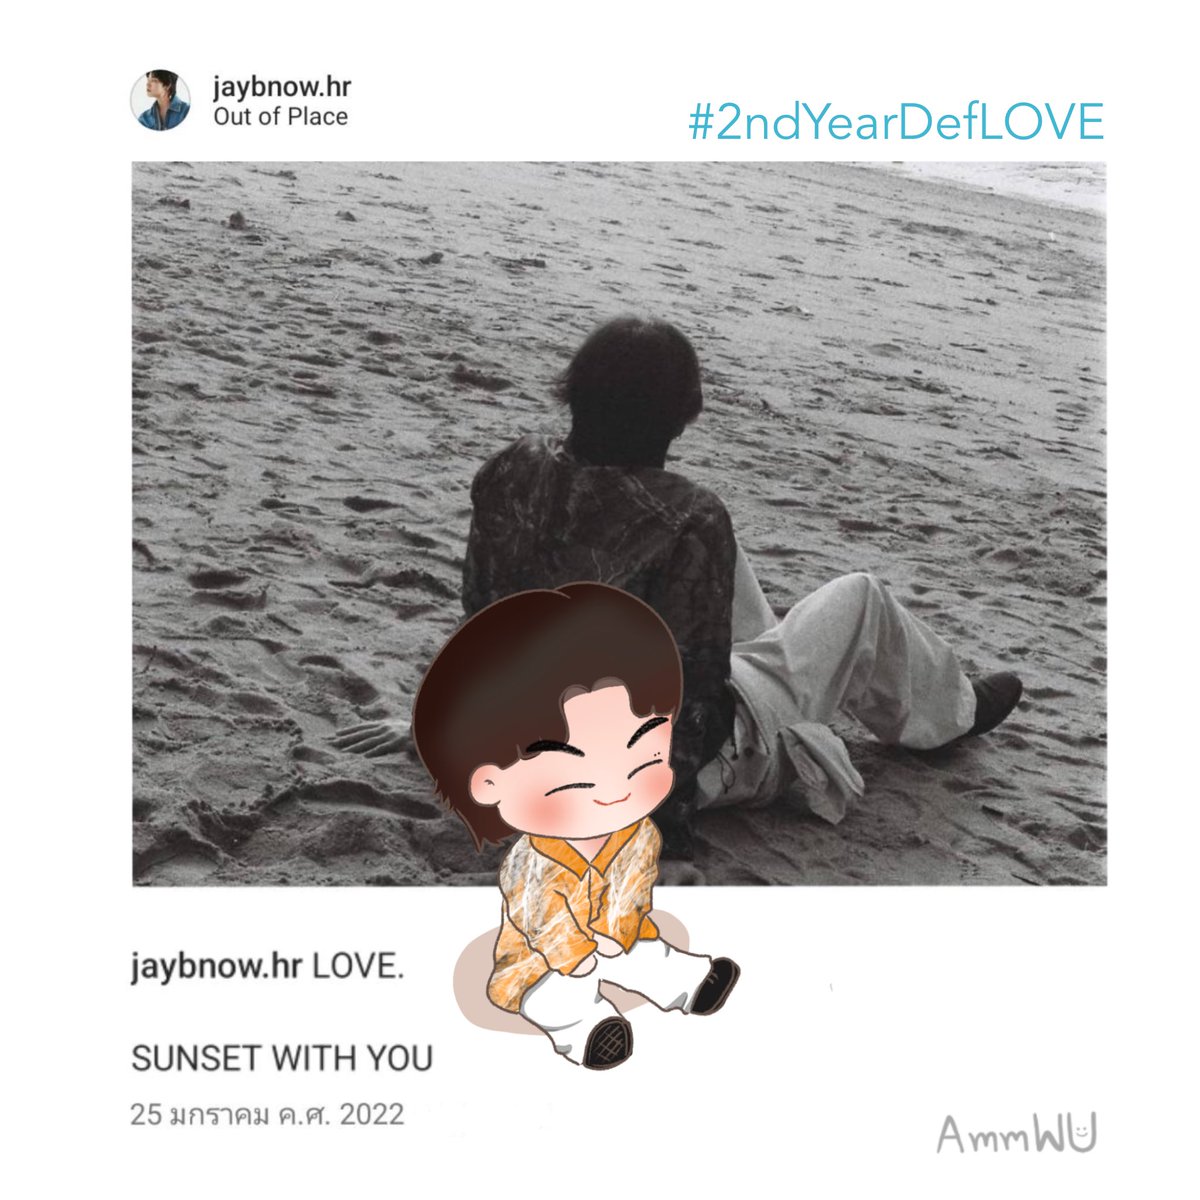 SUNSET WITH YOU  จะอยู่ข้างๆแบบนี้ไปจนแก่ 🥰🤪

2nd Year With LOVE
#2ndYearDefLOVE

#Def #데프  #JAYB #제이비 
#Jaebeom #재범 @jaybnow_hr